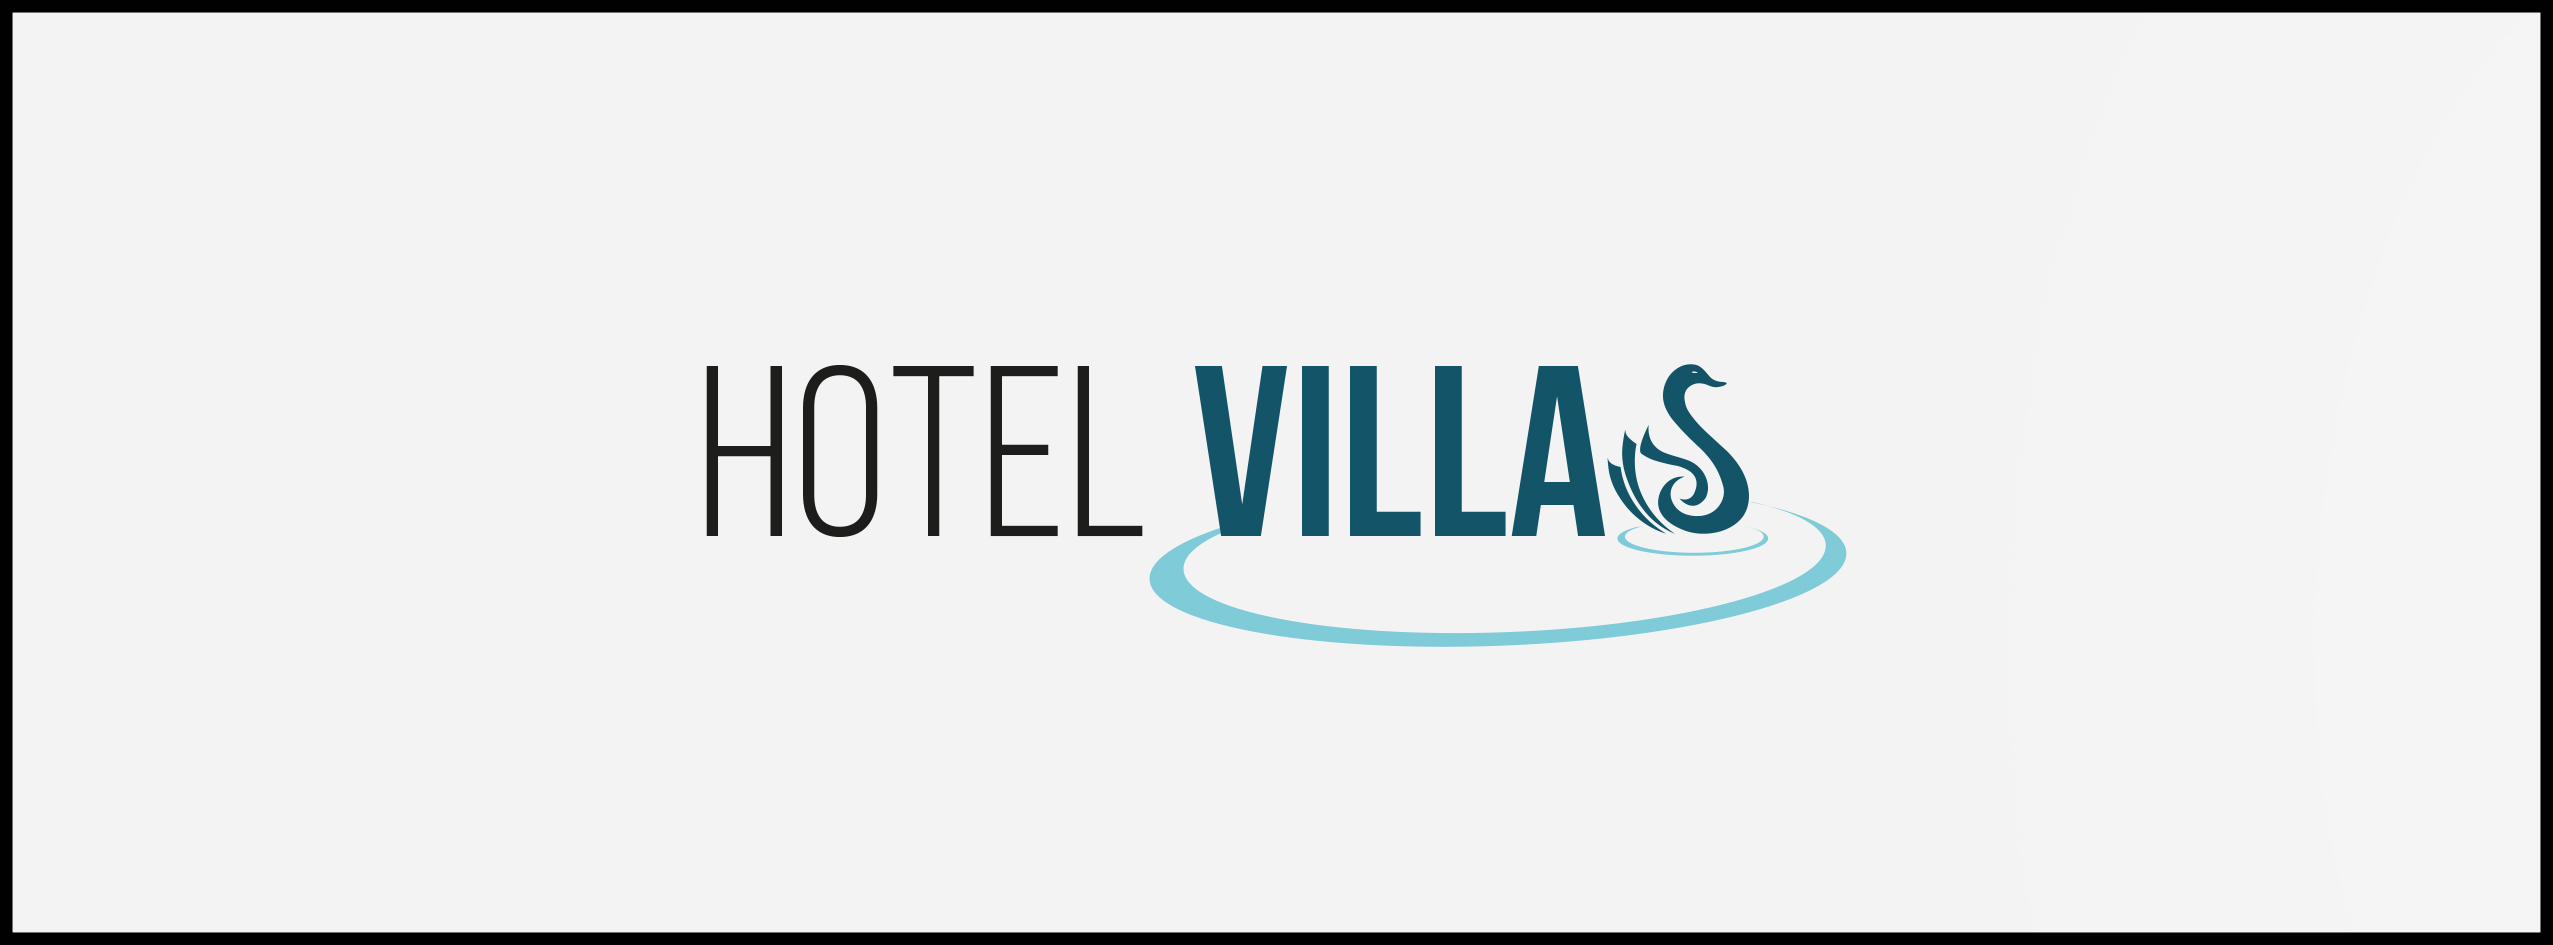 HOTELVİLLAS logo-3 BLACK